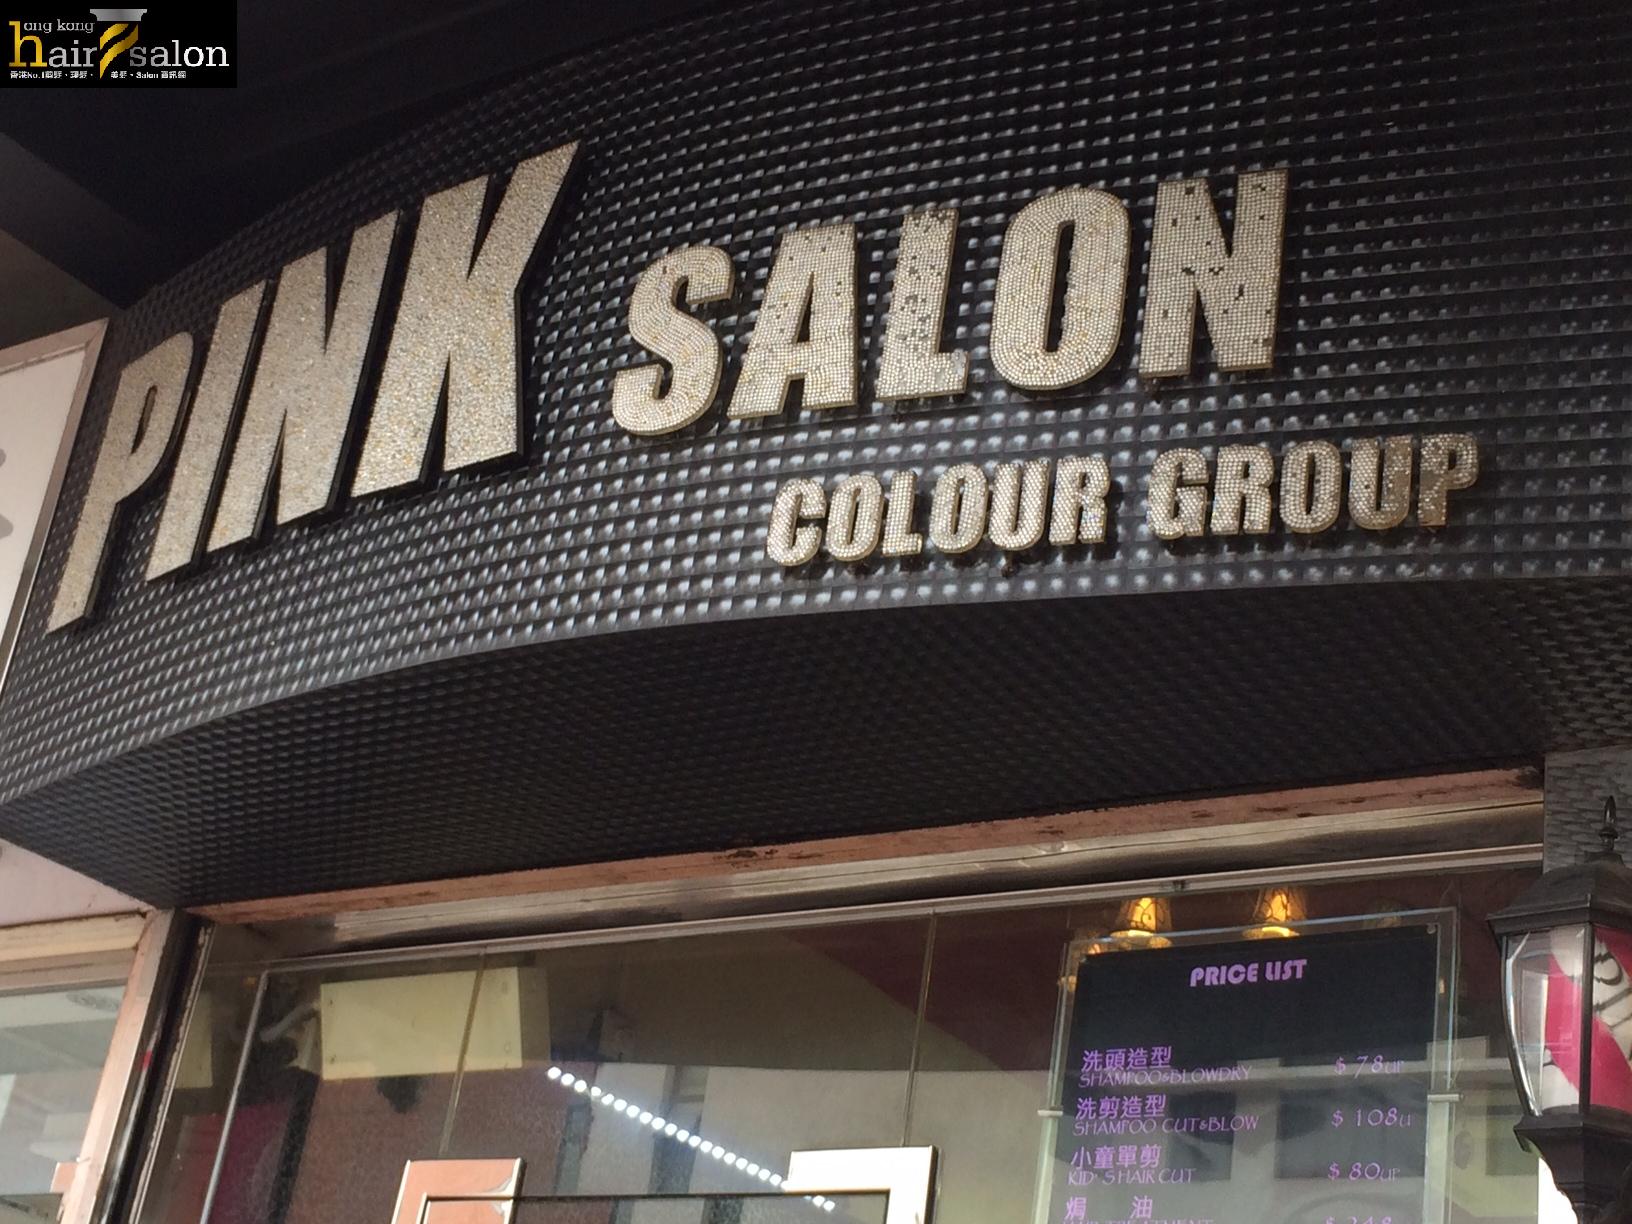 Hair Salon Group Pink Salon @ HK Hair Salon